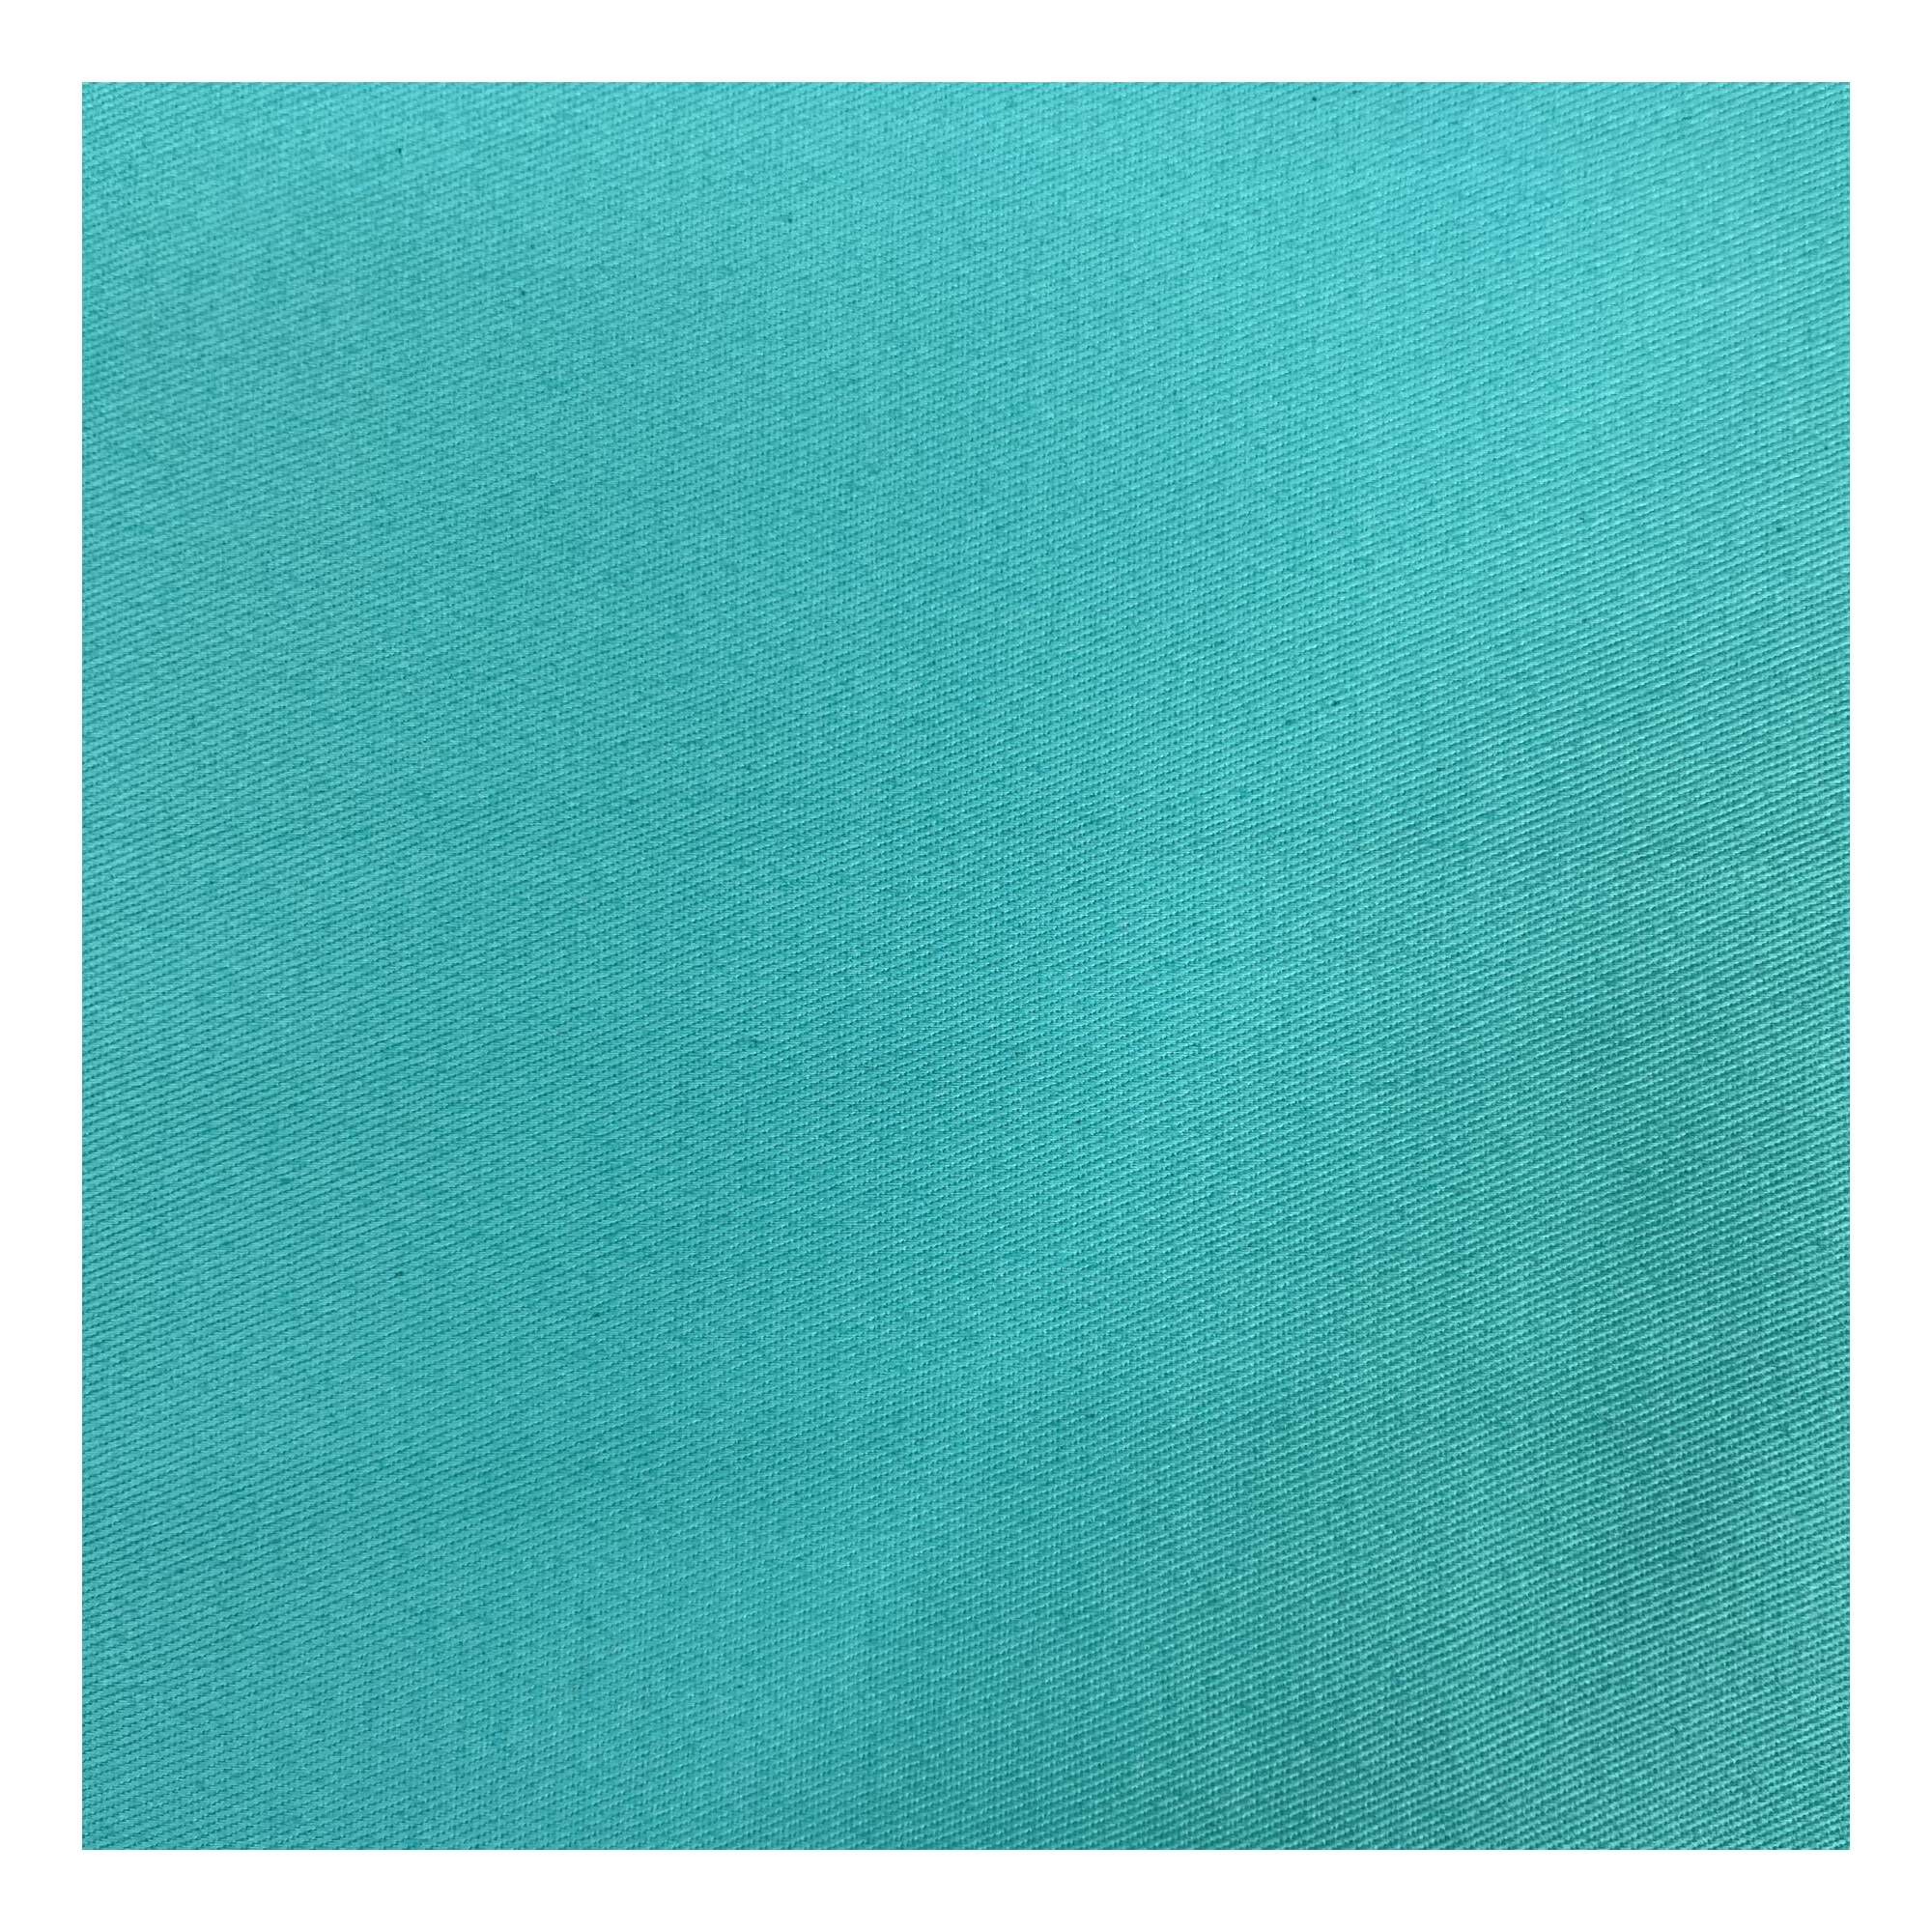 Aqua Lightweight Drill Fabric by the Metre | Hobbycraft